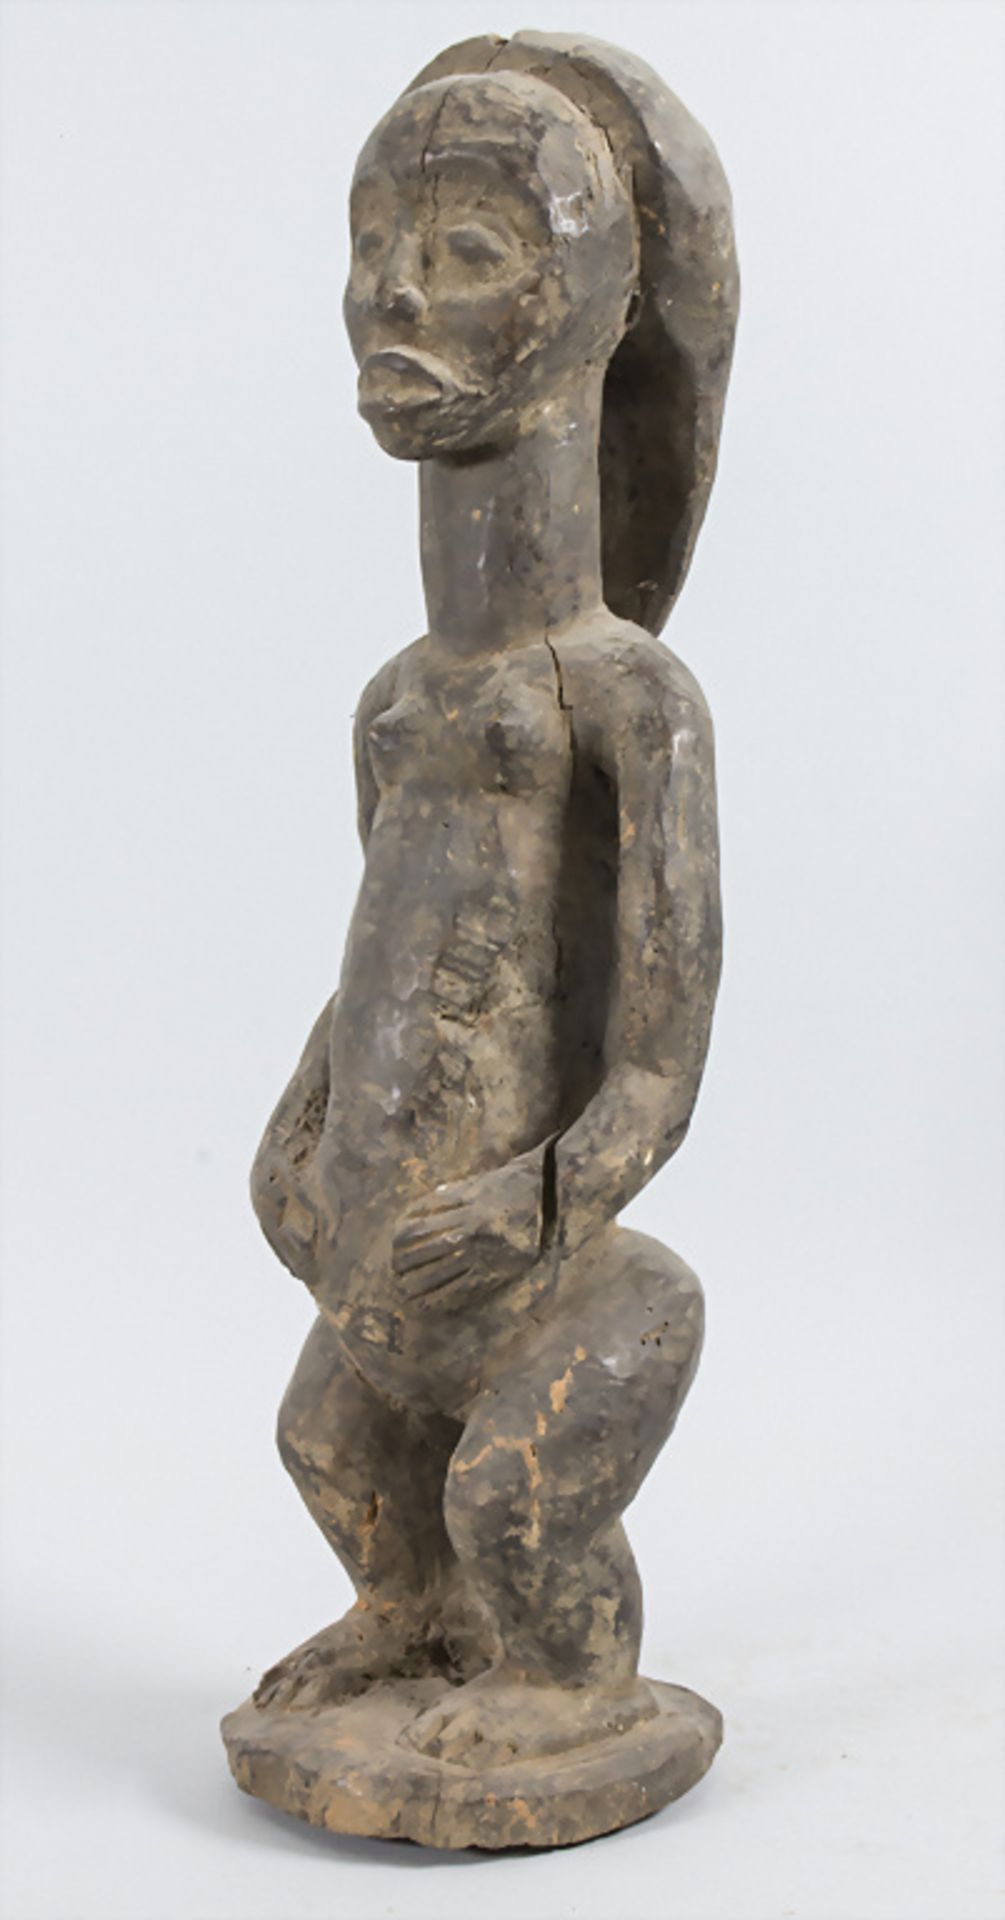 Fruchtbarkeitsfigur / A fertility figure, Afrika